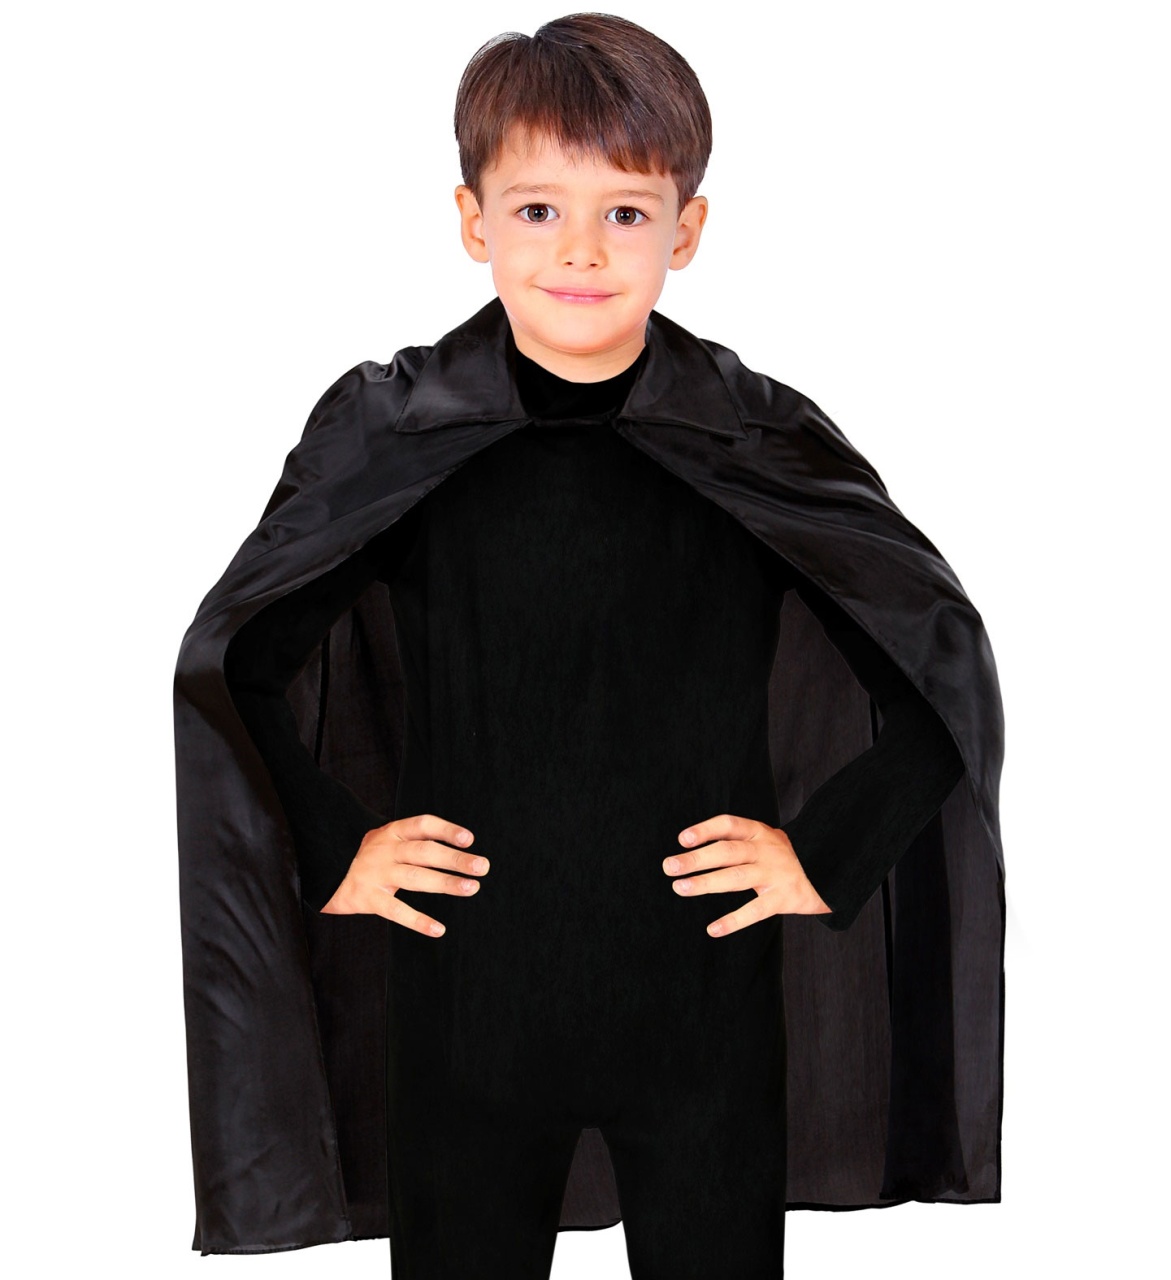 Kostüm Vampirumhang Umhang für Kinder 100 cm